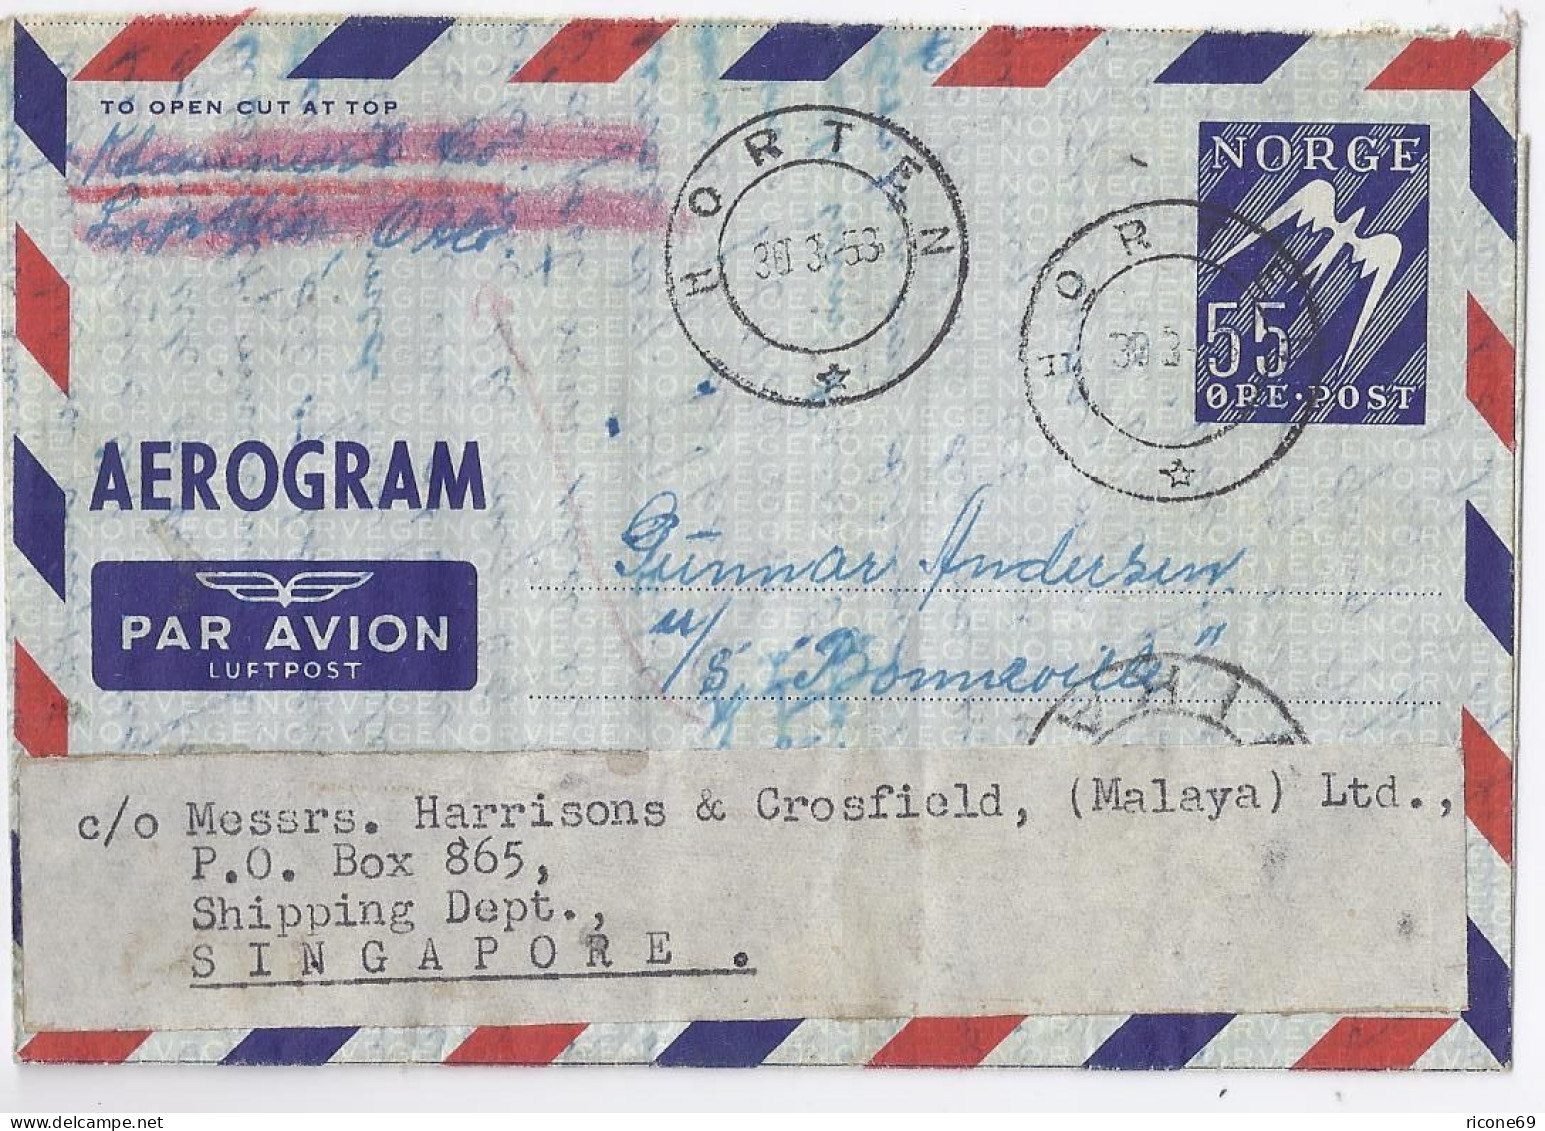 Norwegen Singapore 1953, 55 öre Aerogramm Ganzsache Brief V. Horten. #1617 - Covers & Documents